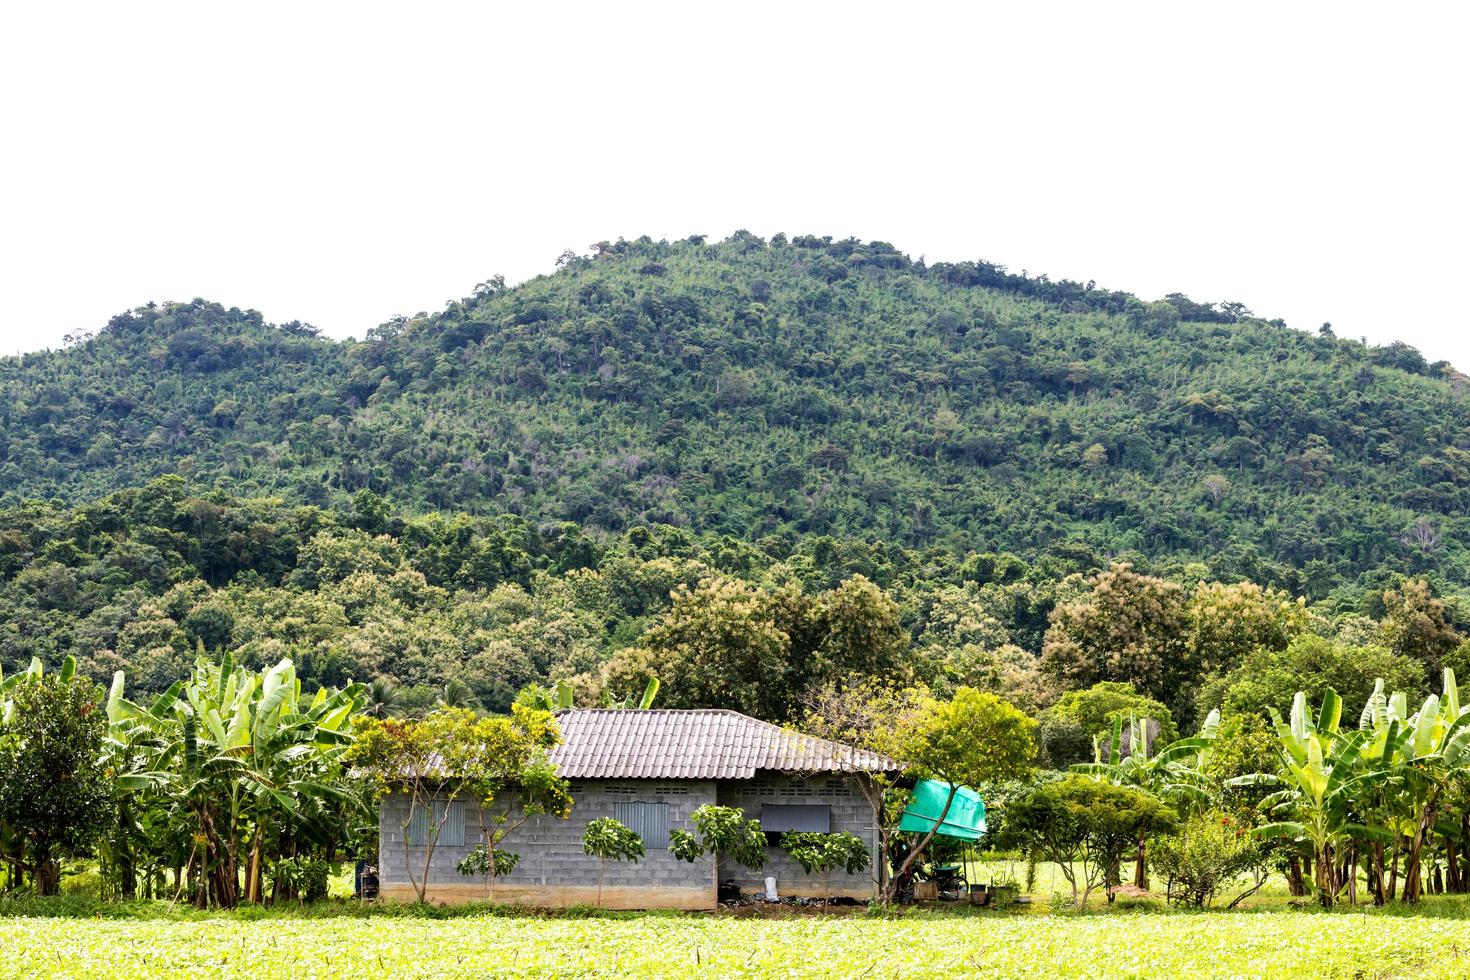 A house in a banana park near the mountain. photo